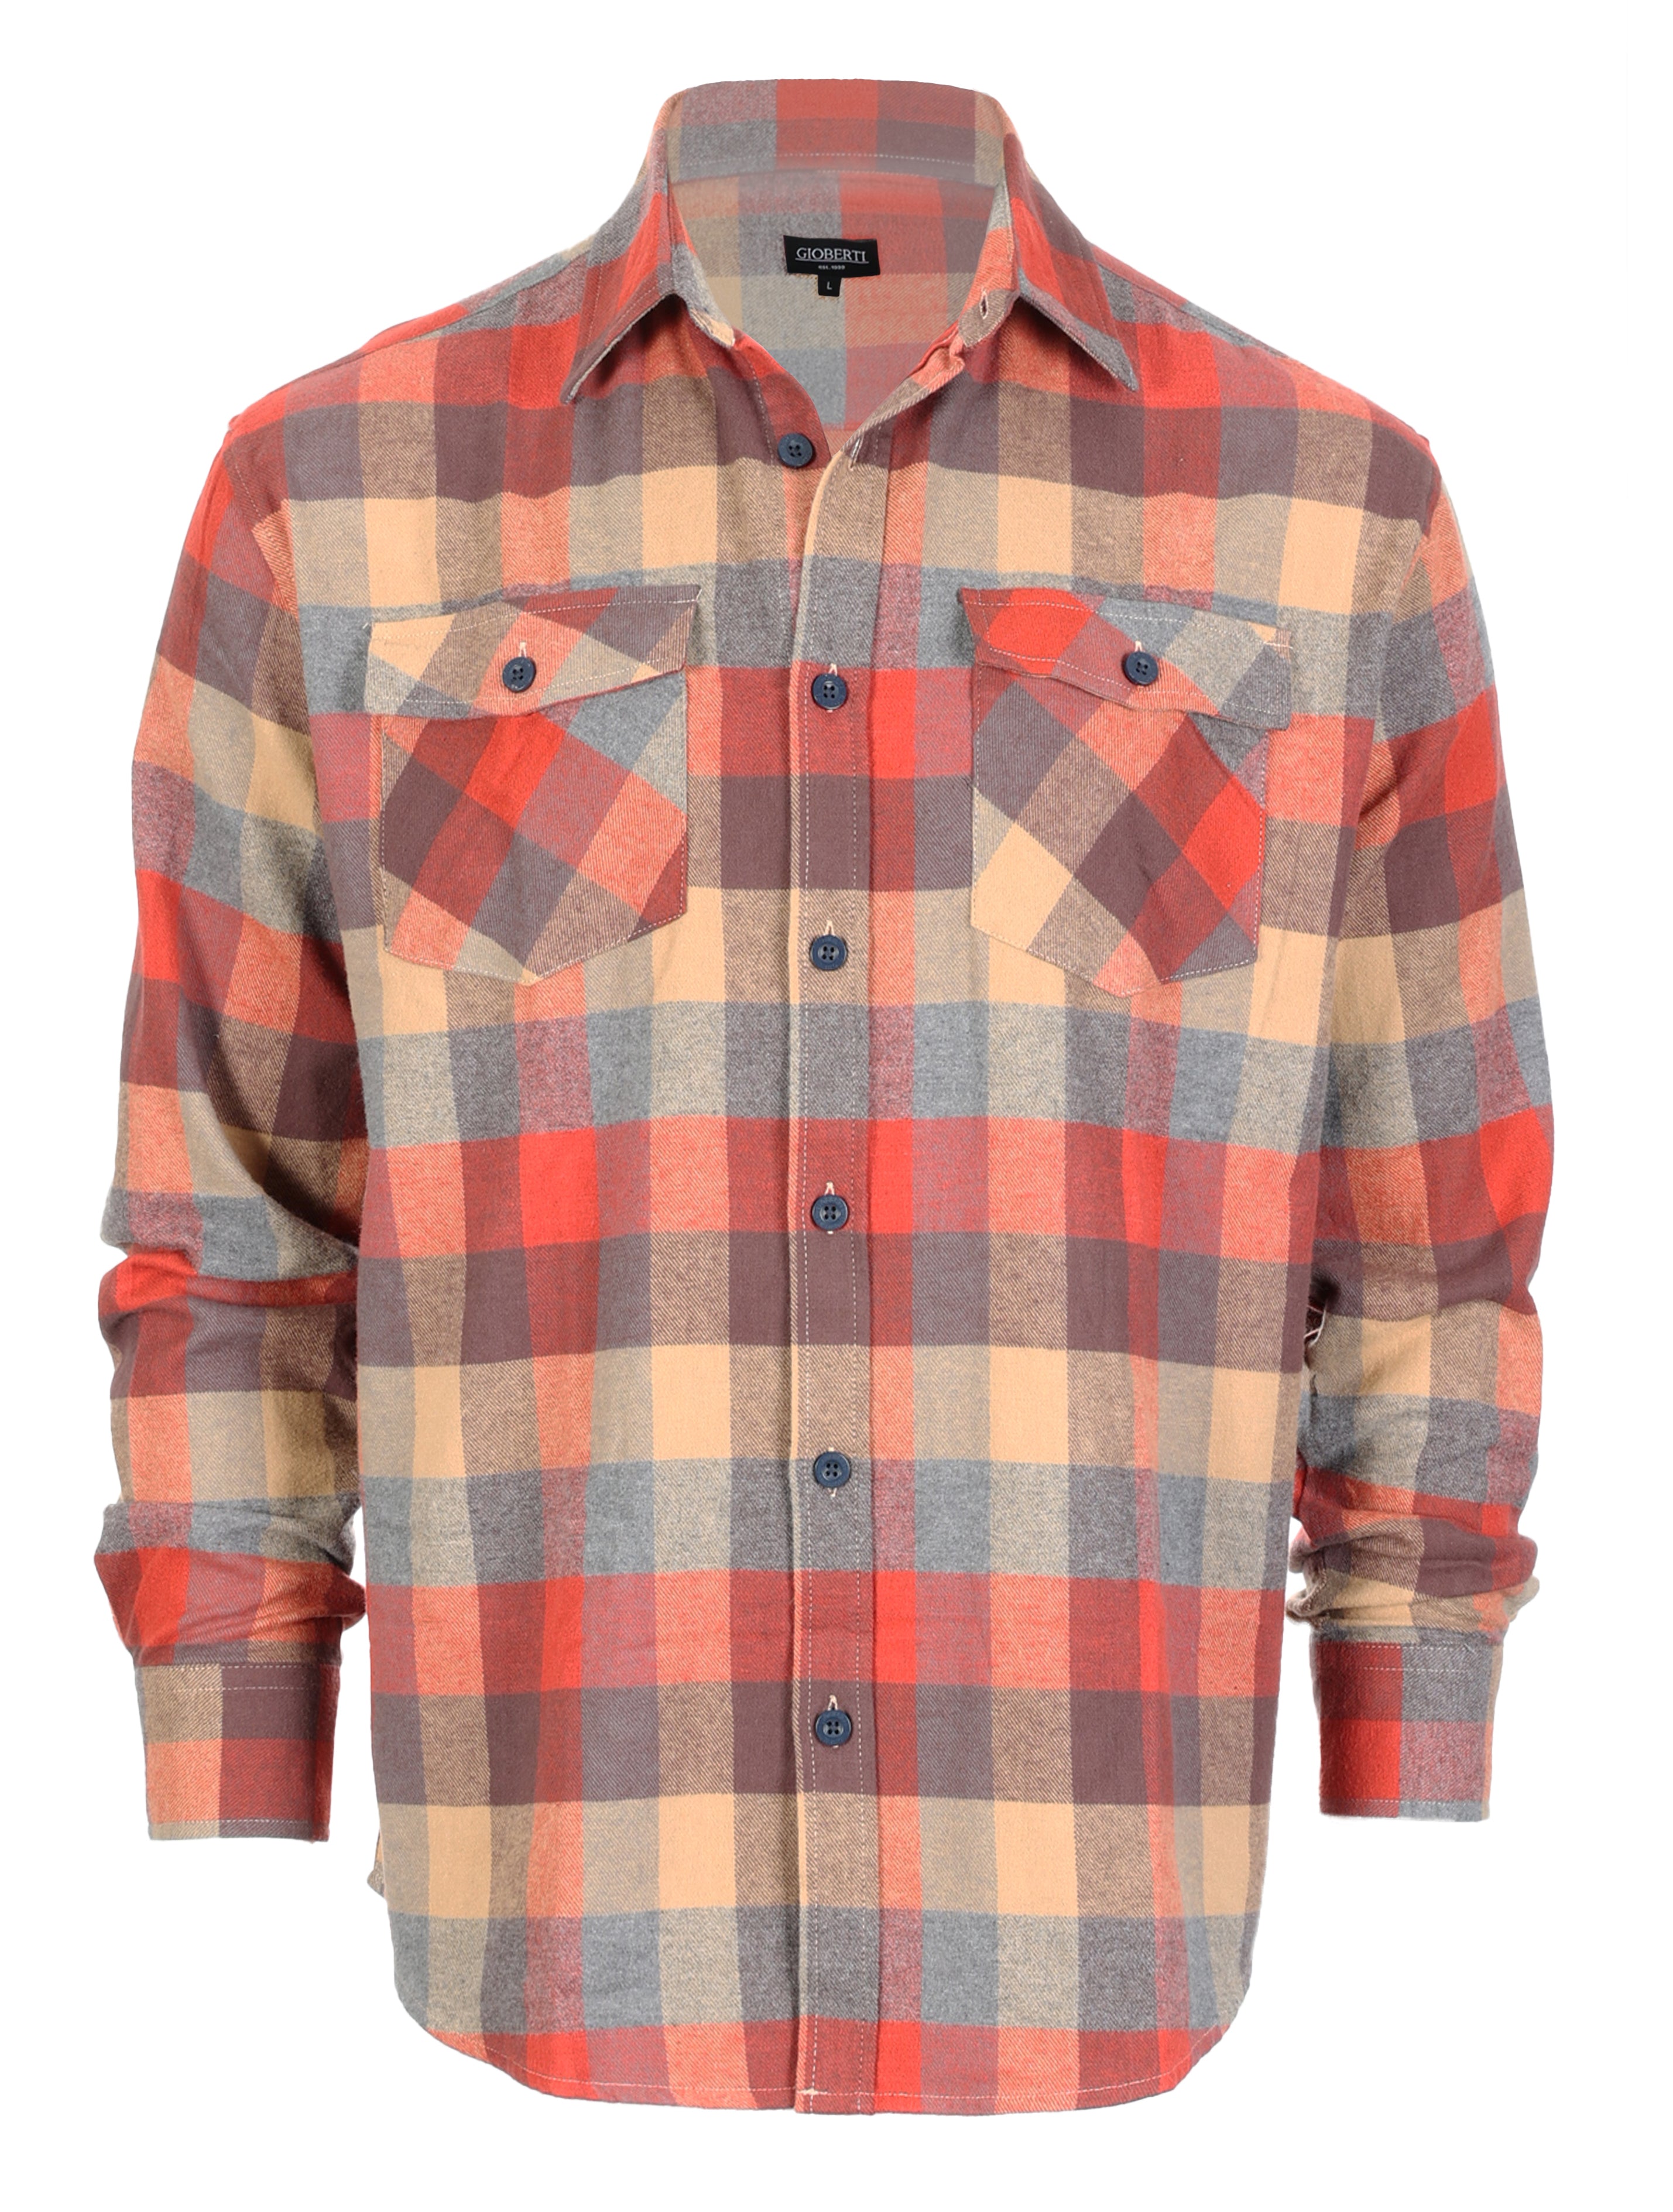 title:Gioberti Men's Orange / Gray / Khaki Plaid Checkered Brushed Flannel Shirt;color:Orange / Gray / Khaki